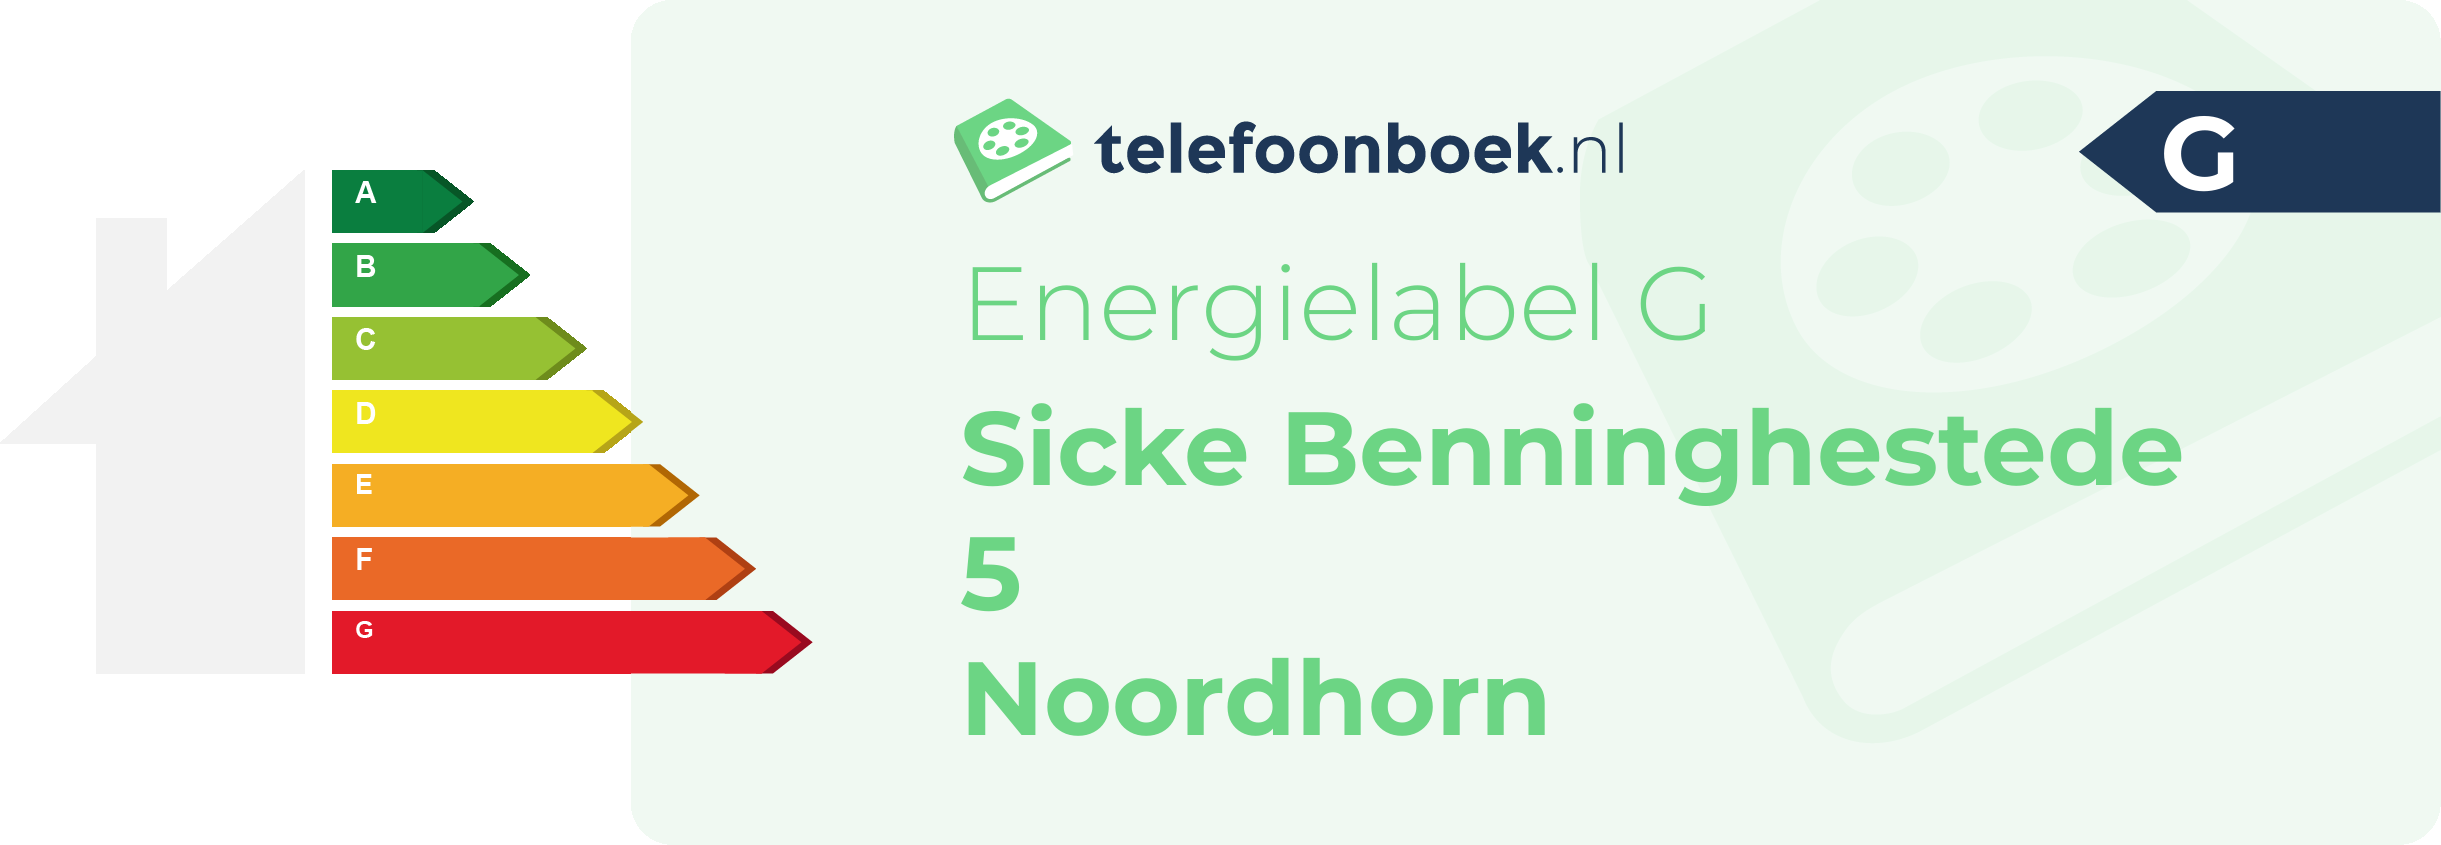 Energielabel Sicke Benninghestede 5 Noordhorn